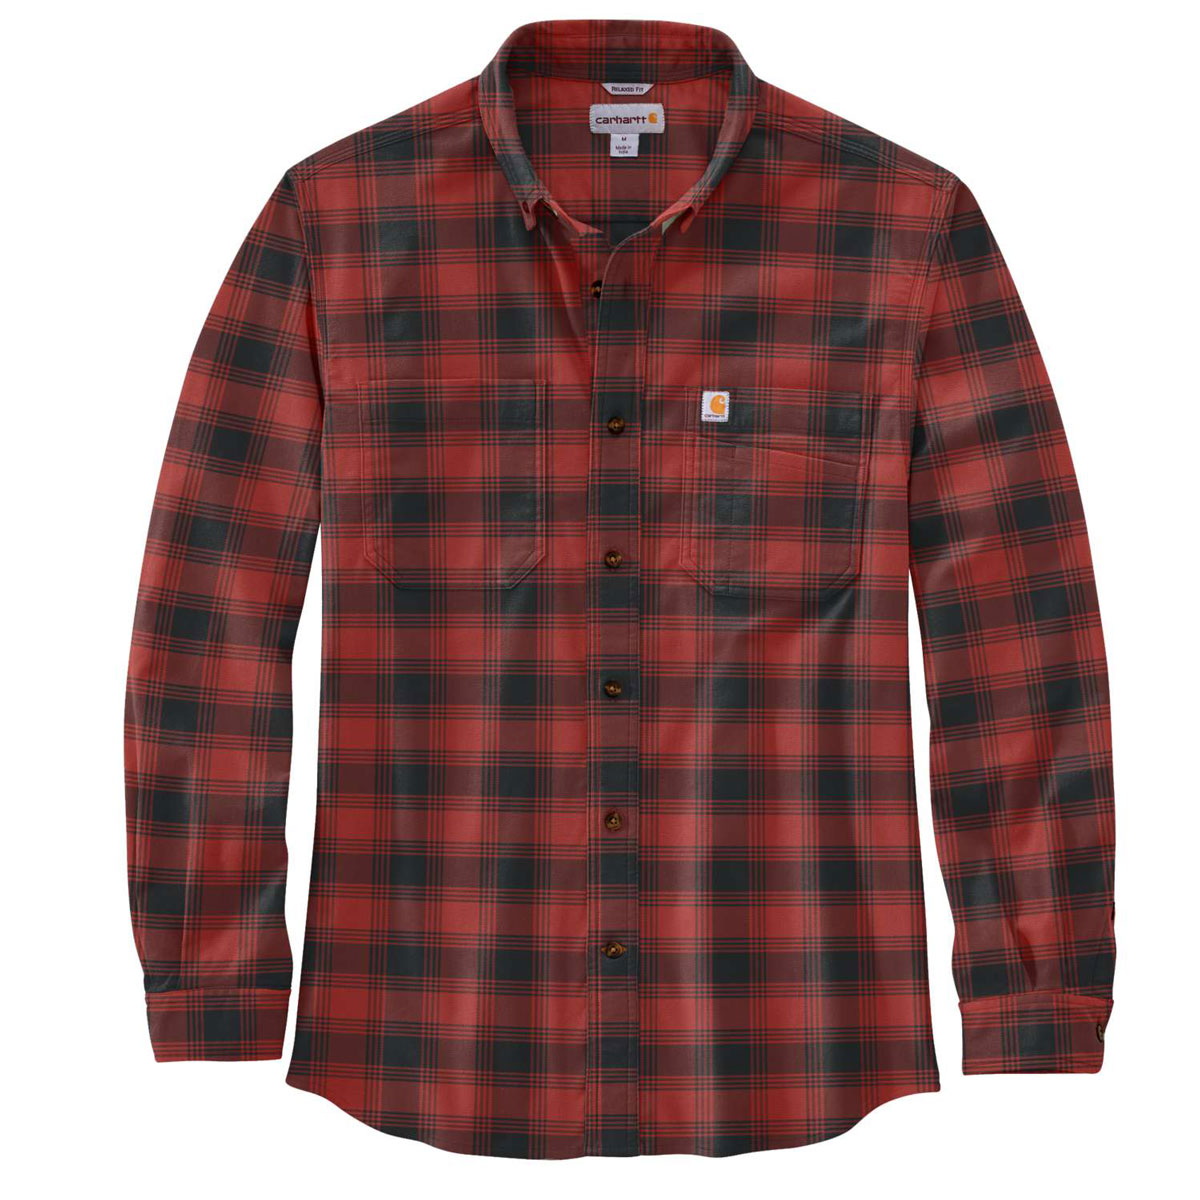 Carhartt Flannel L/S Plaid Shirt - 2